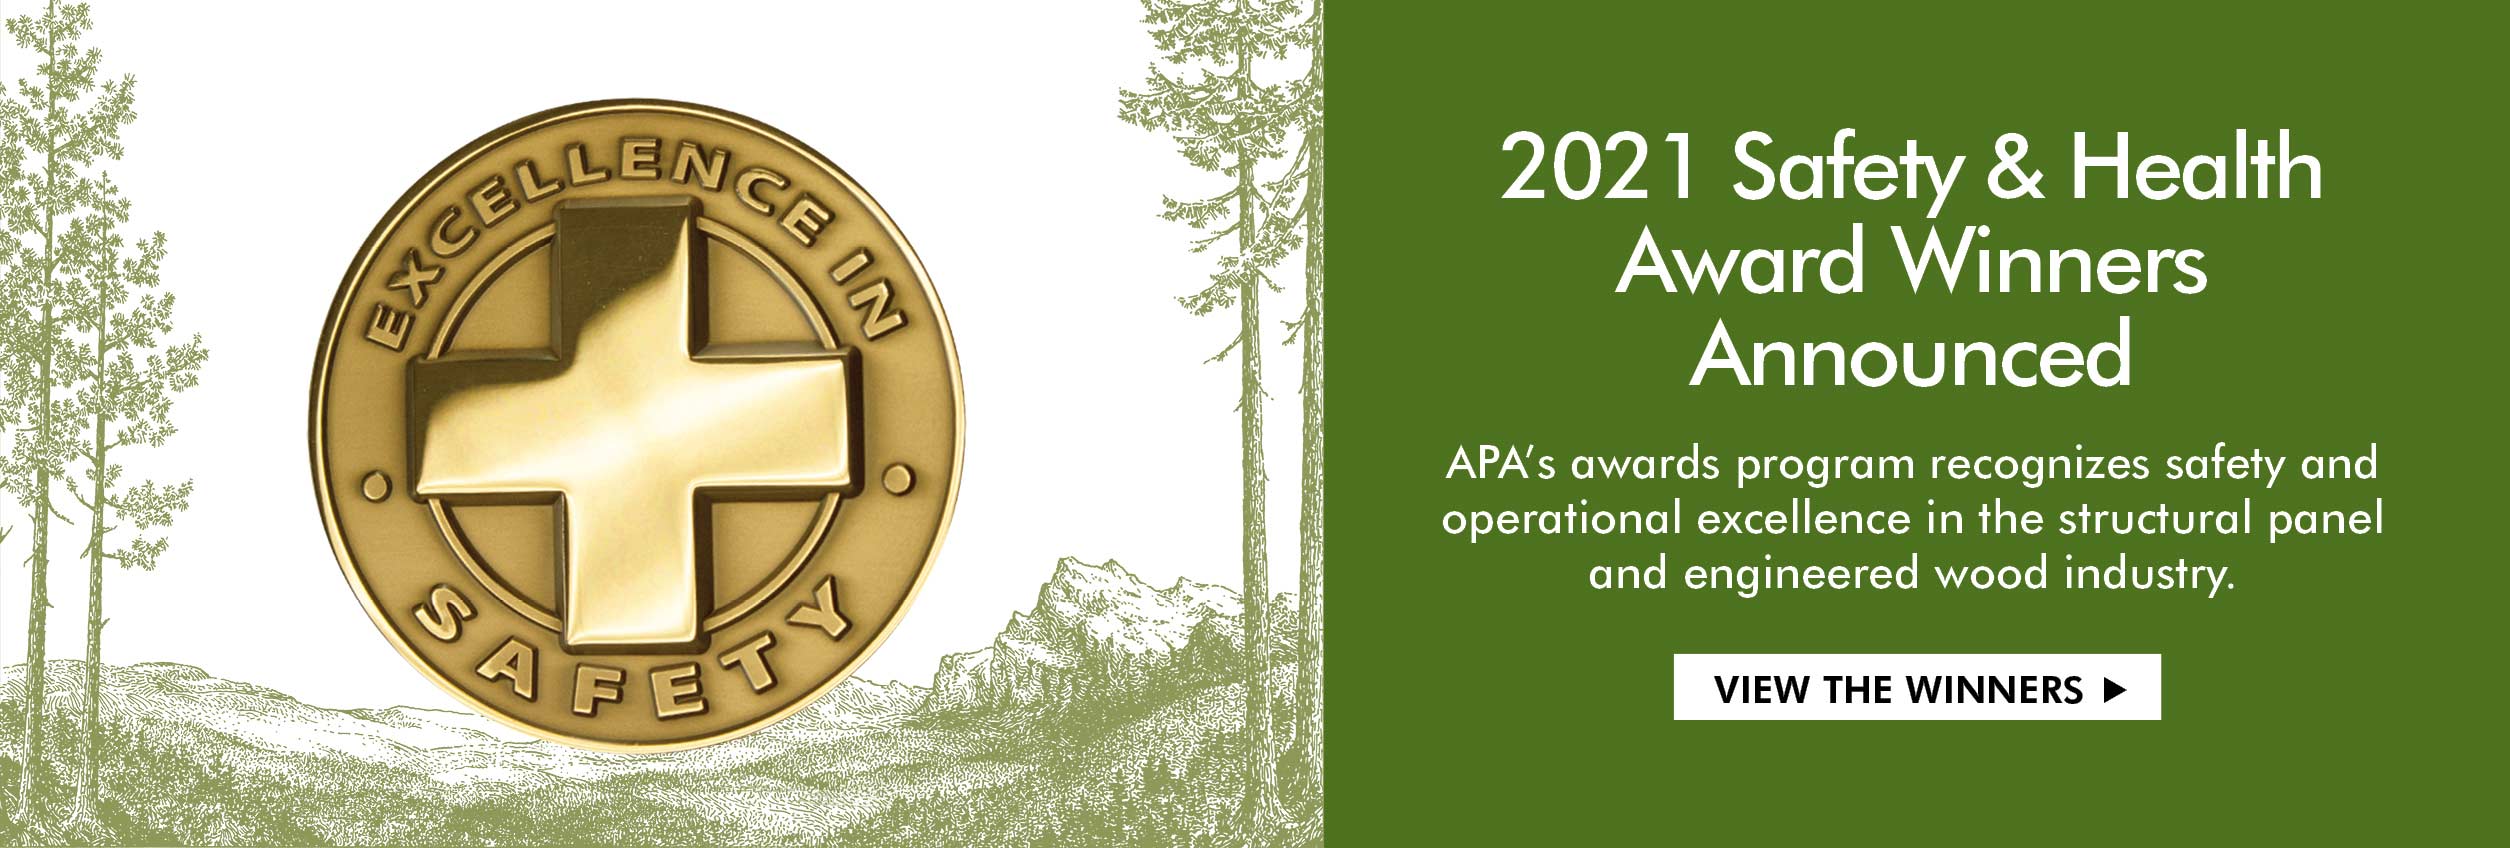 APA Safety and Health Awards